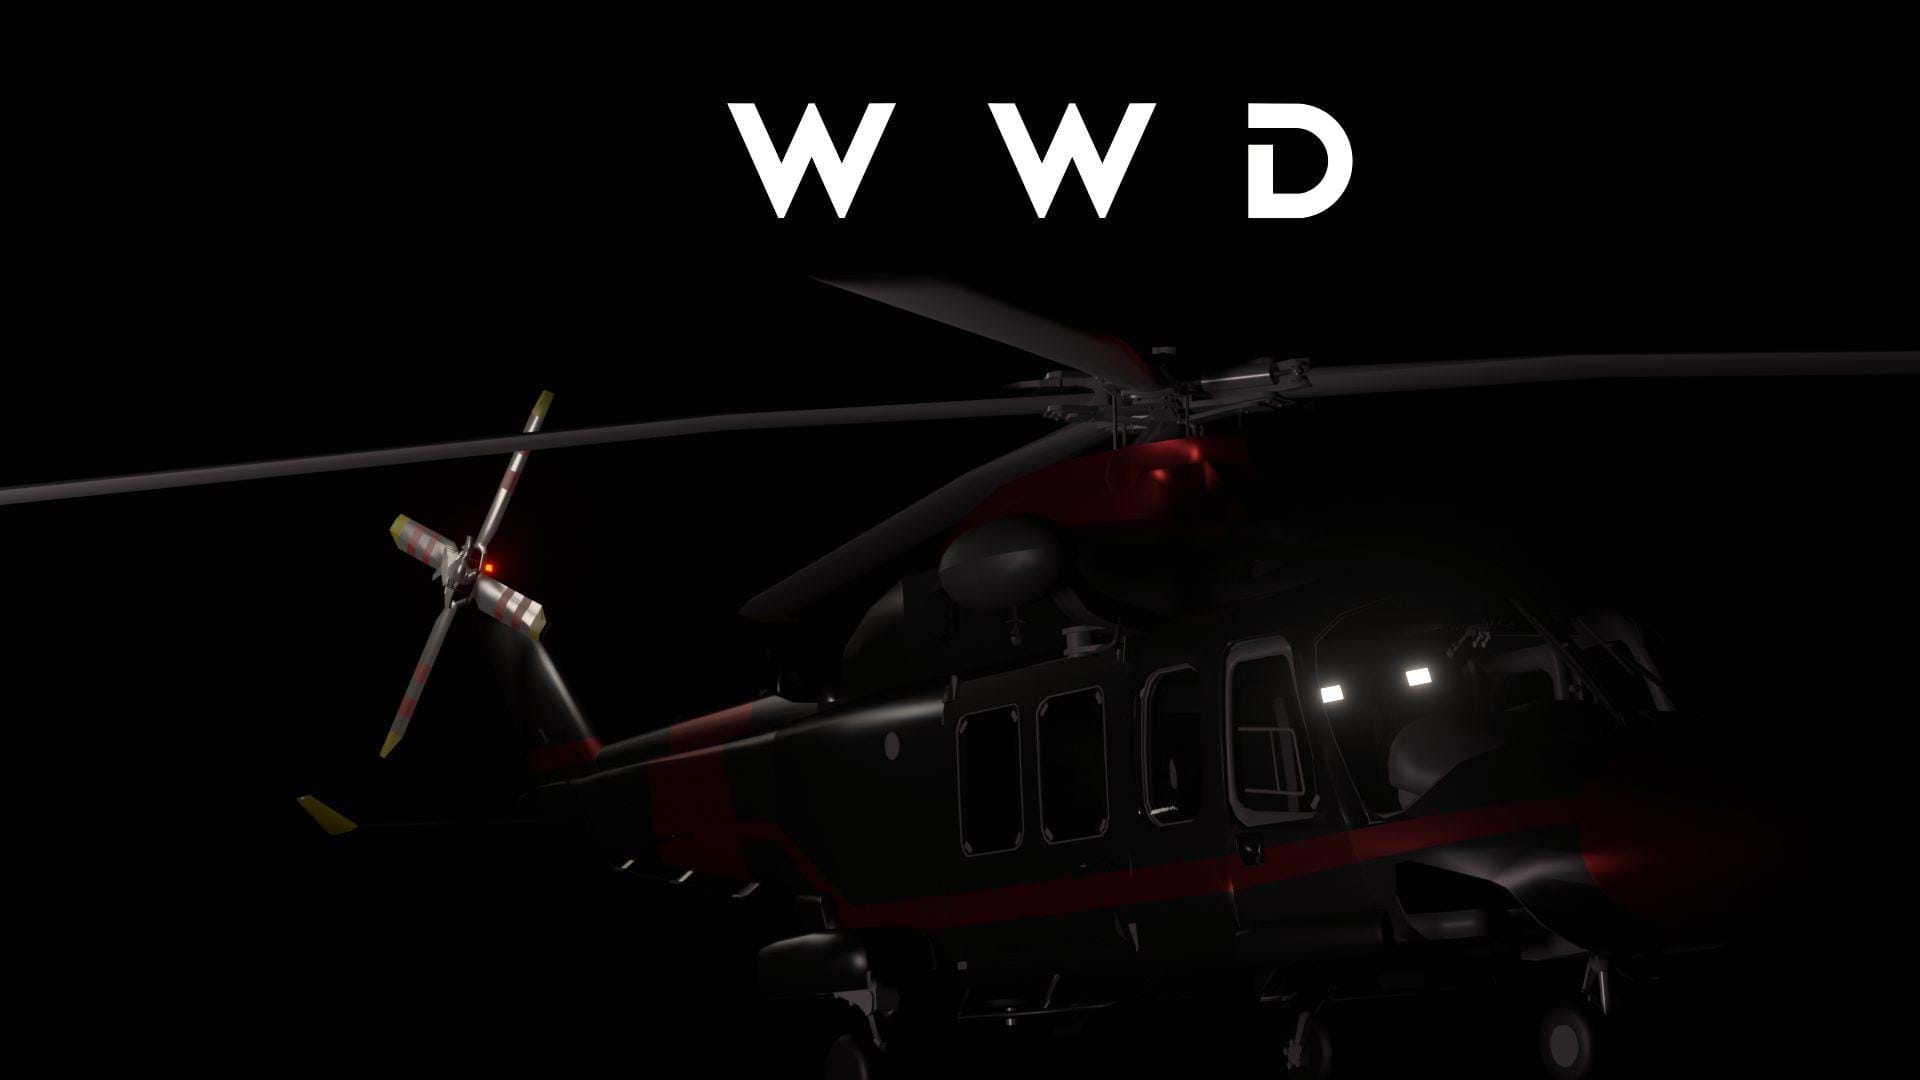 WWD AW139 for Microsoft Flight Simulator